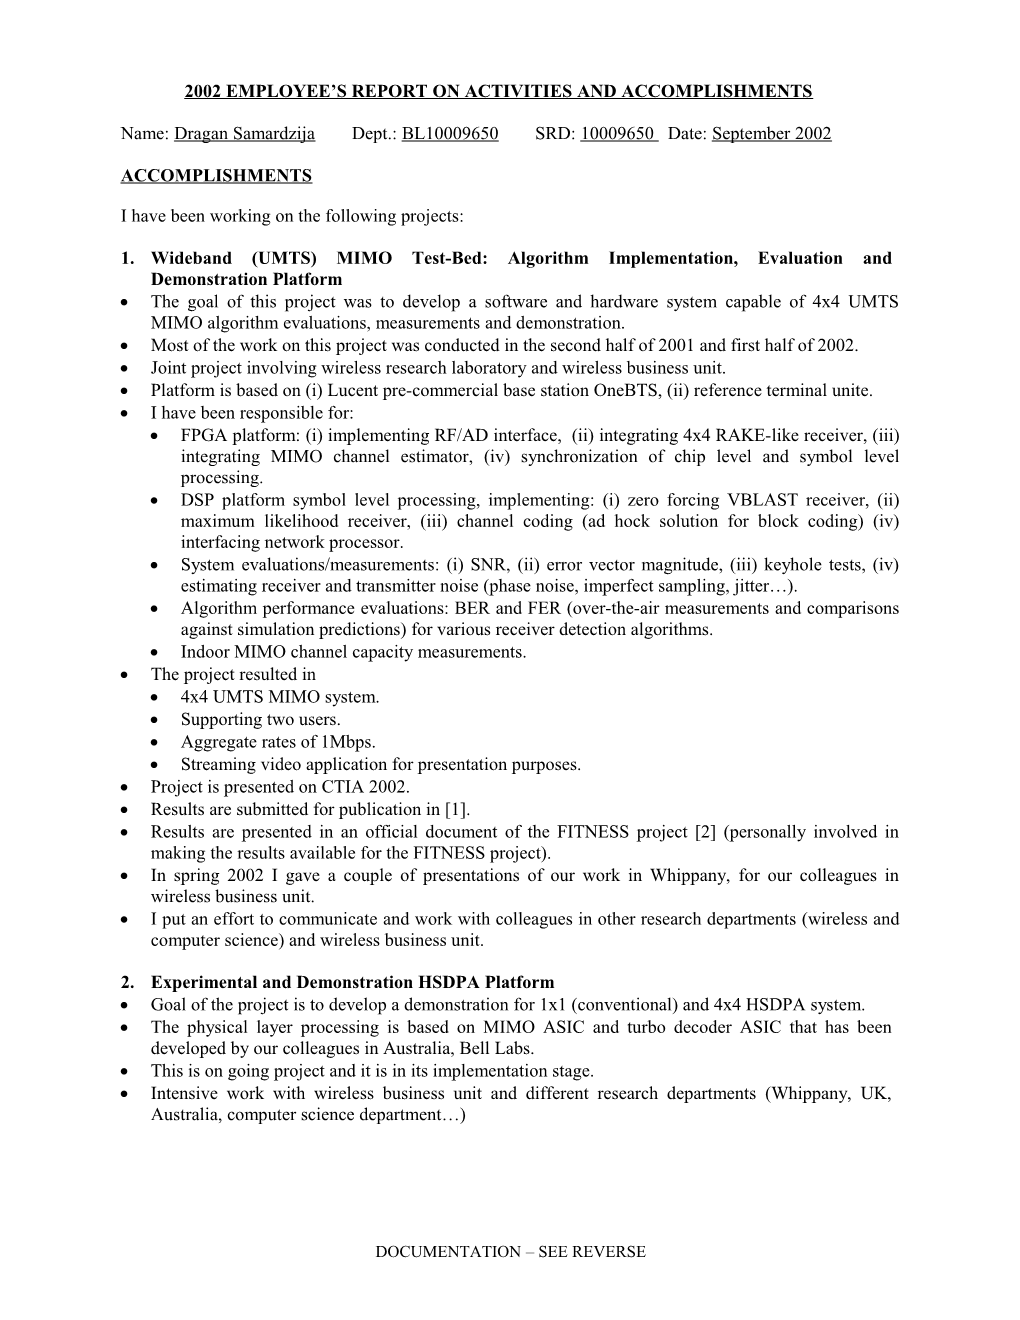 2002 Employee S Report on Activities and Accomplishments